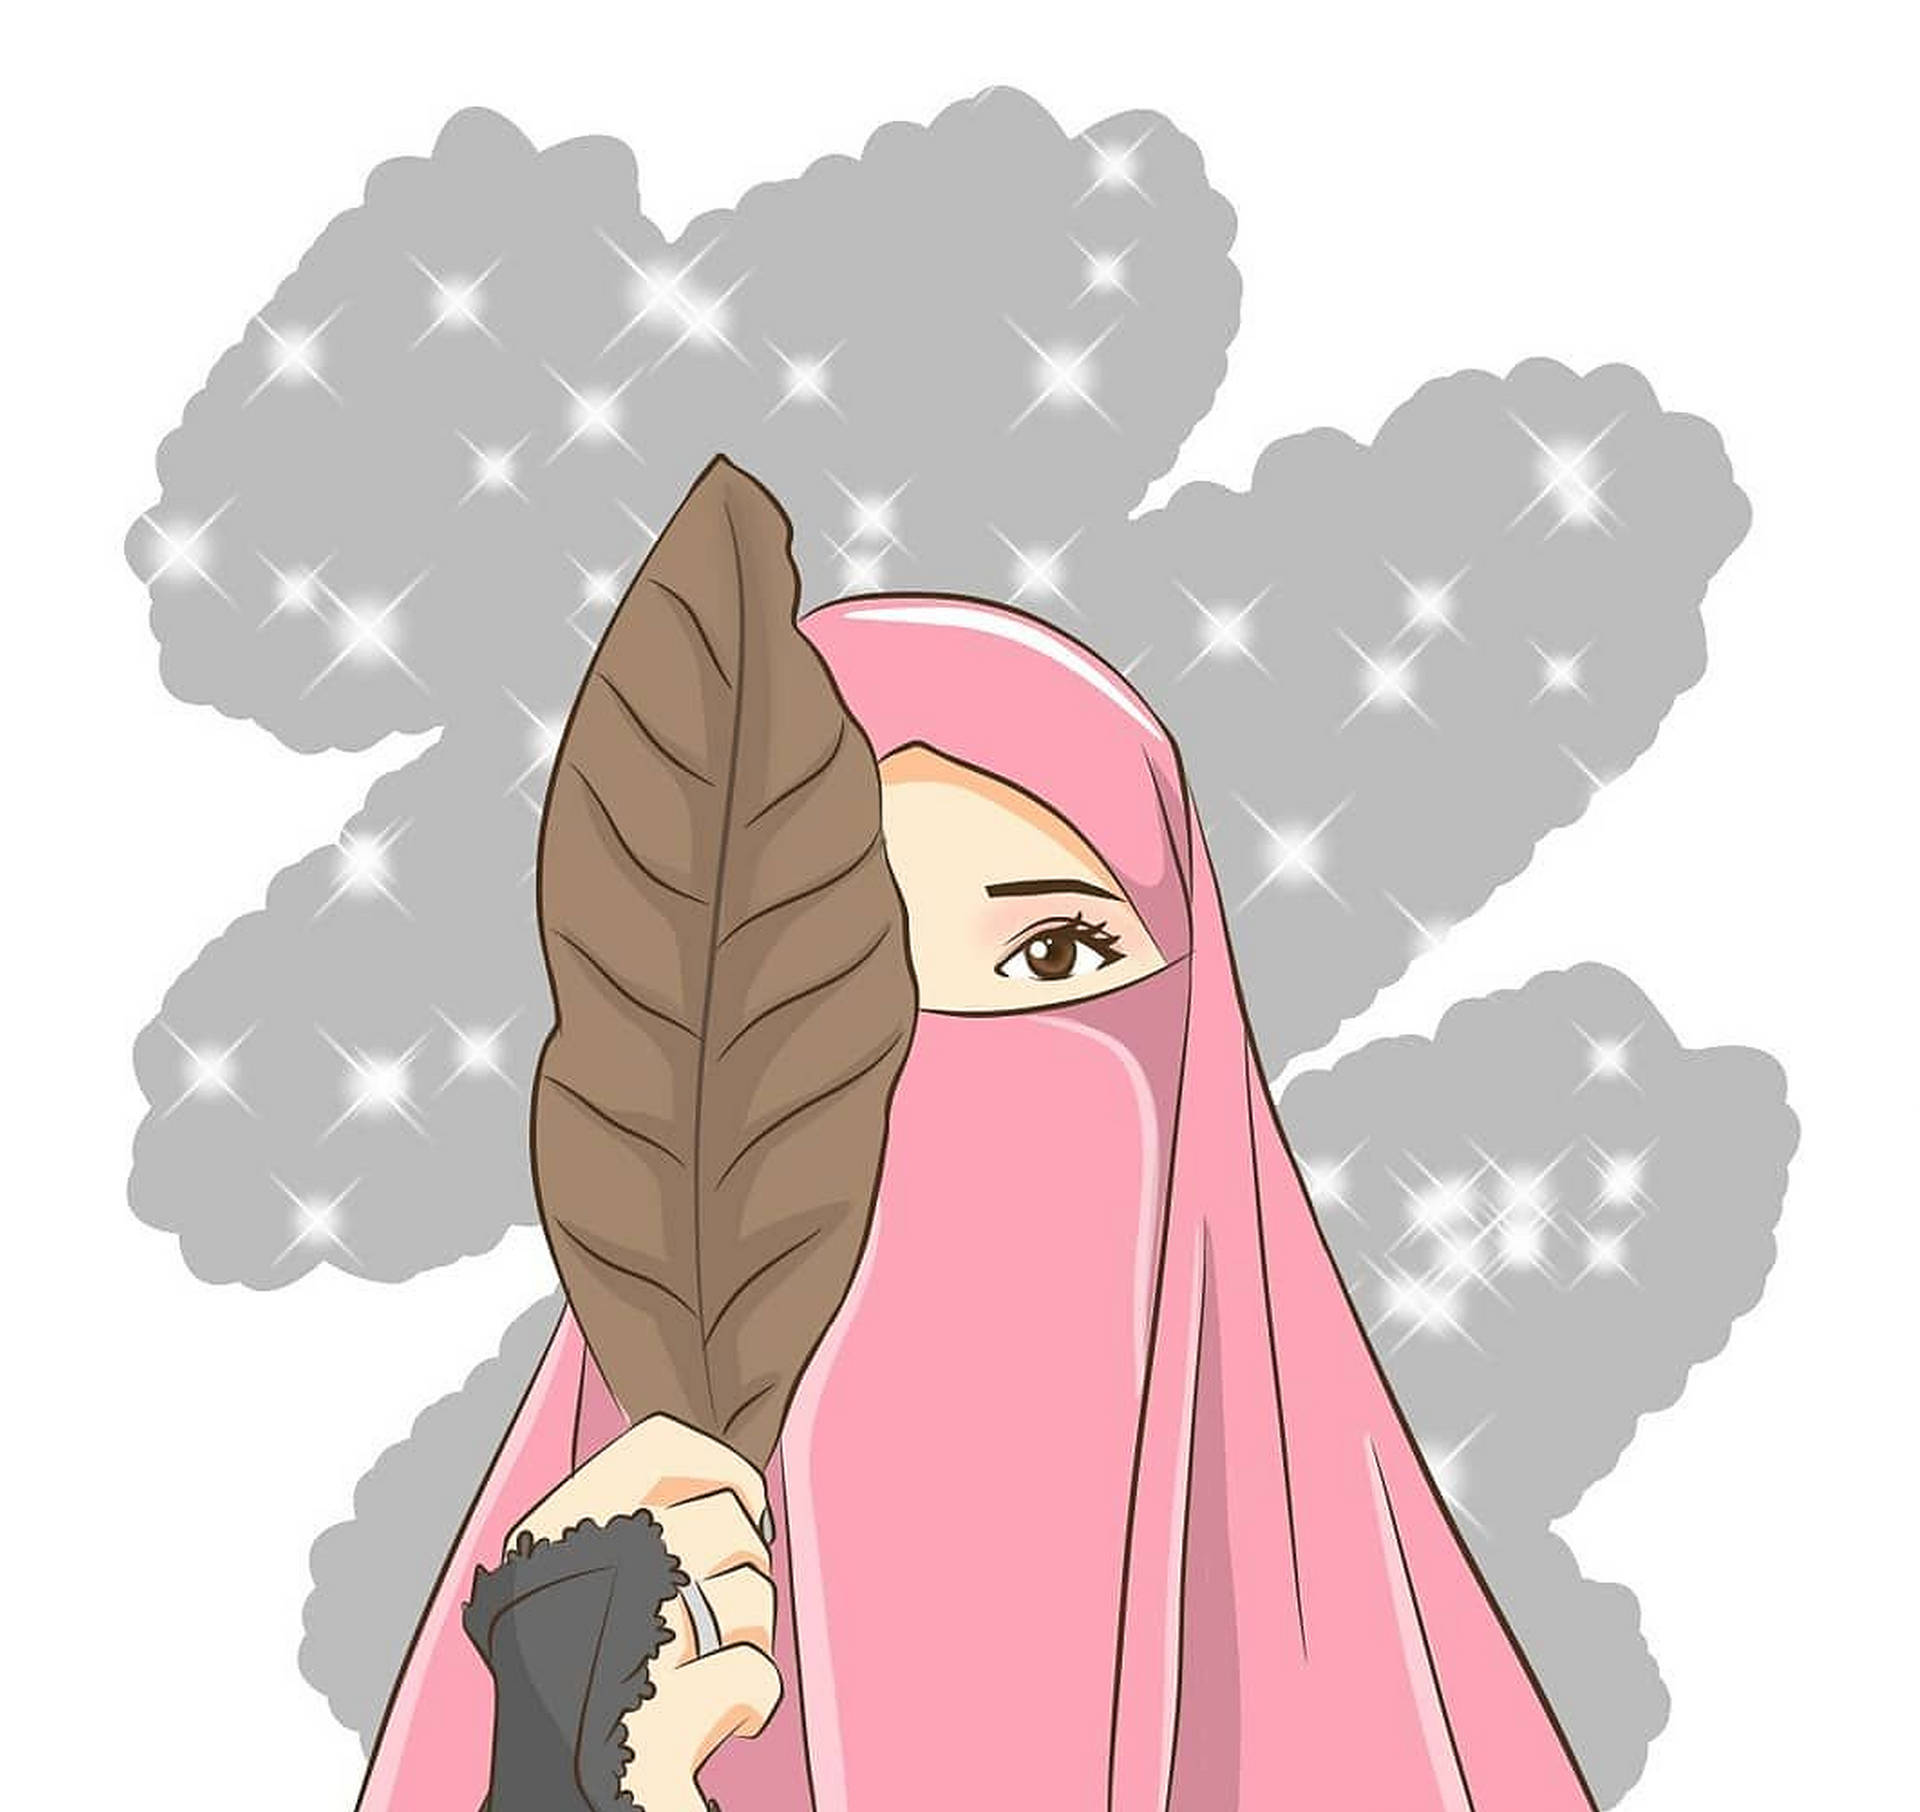 Download Muslim Girl Cartoon Profile Picture